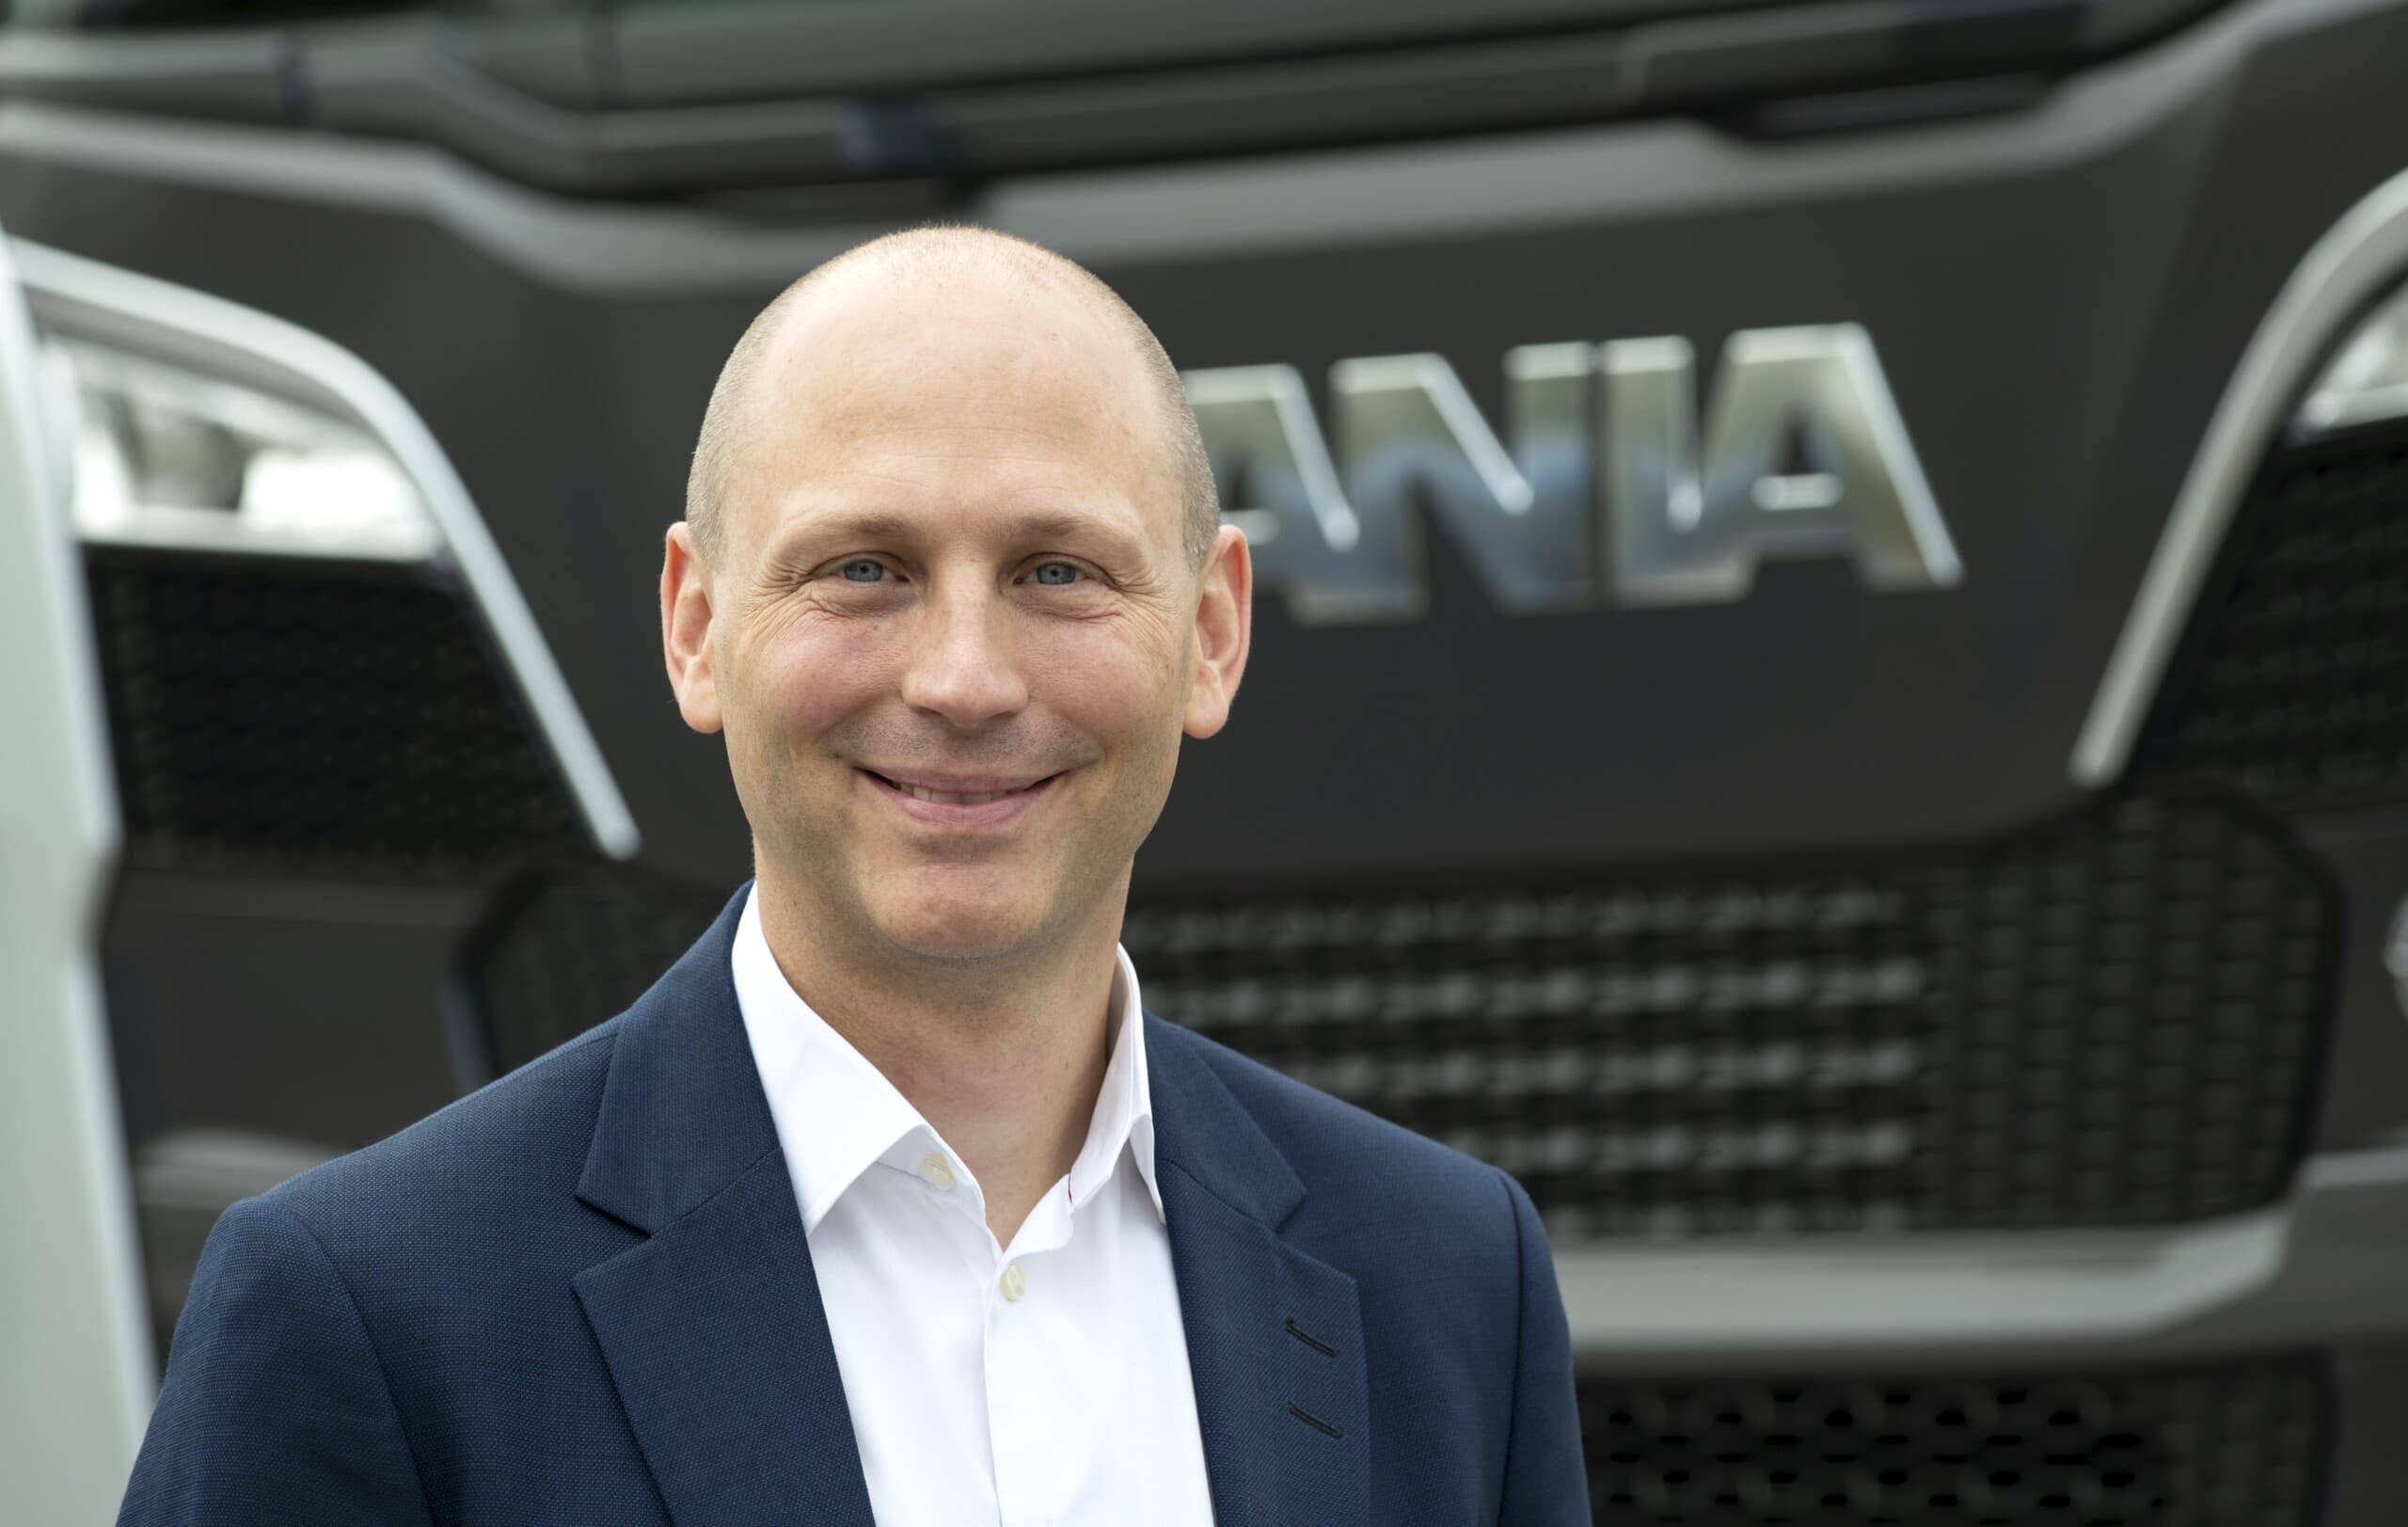 Stefan Dorski, Senior Vice President, Trucks